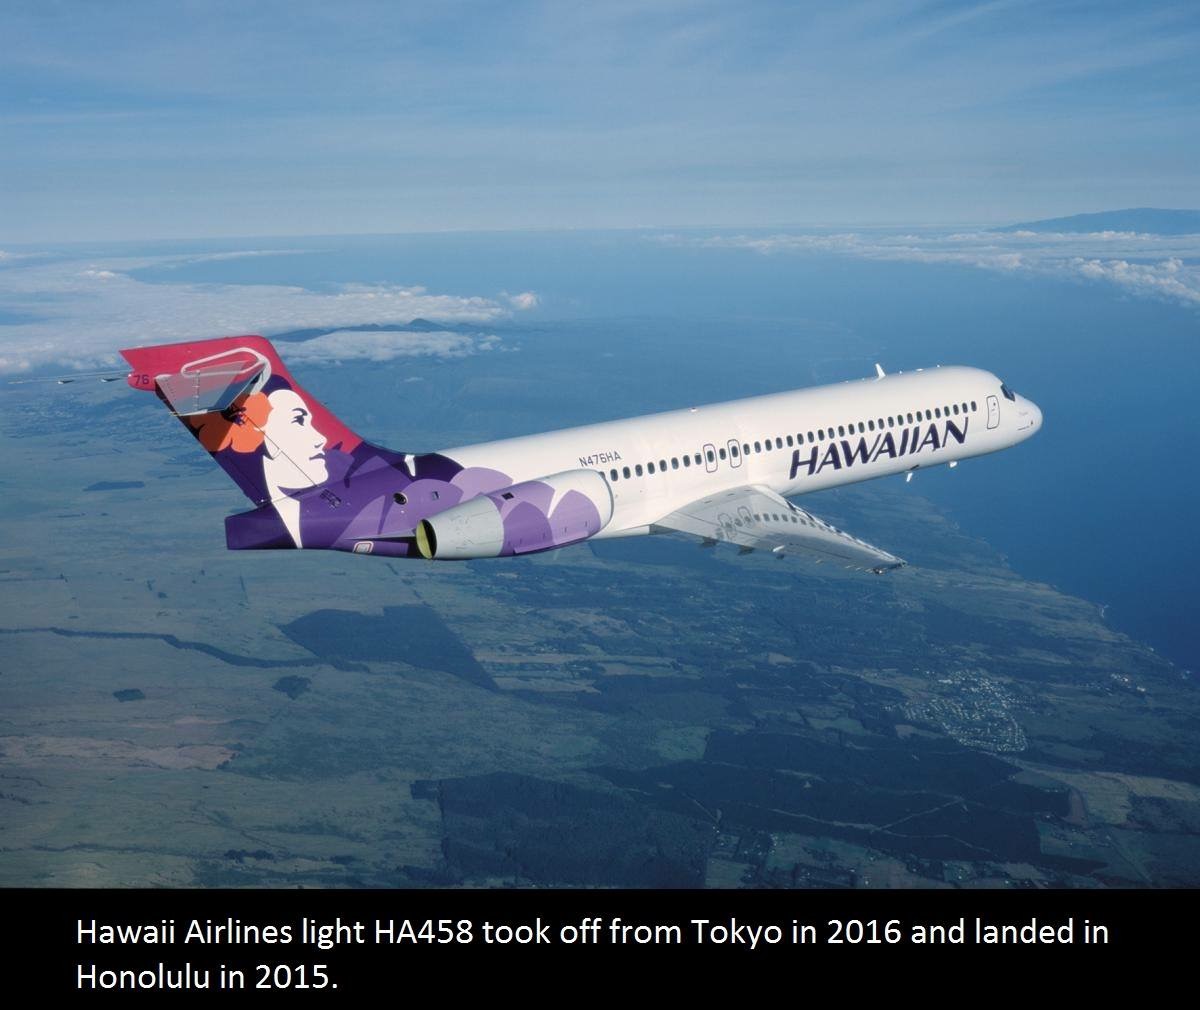 hawaiian airlines maui - N475HA Hawanan" Hawaii Airlines light HA458 took off from Tokyo in 2016 and landed in Honolulu in 2015.